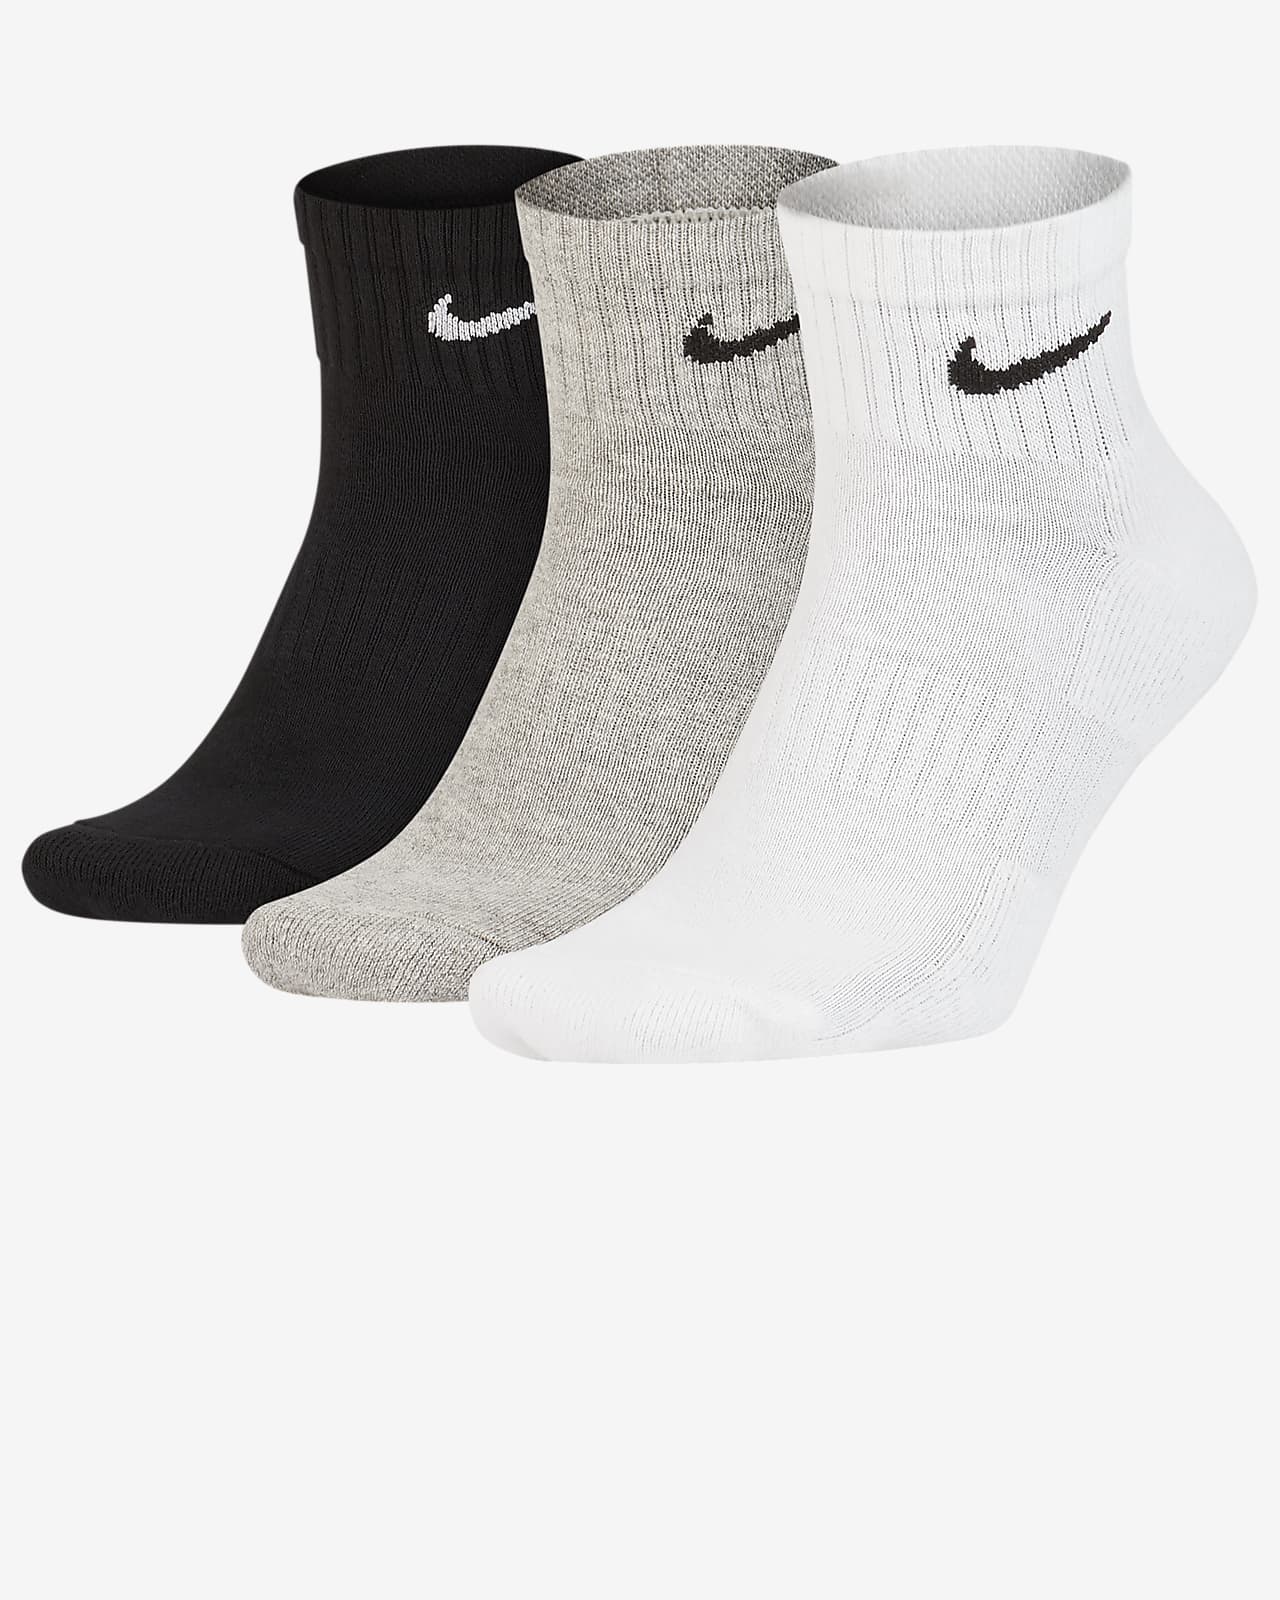 nike white training socks